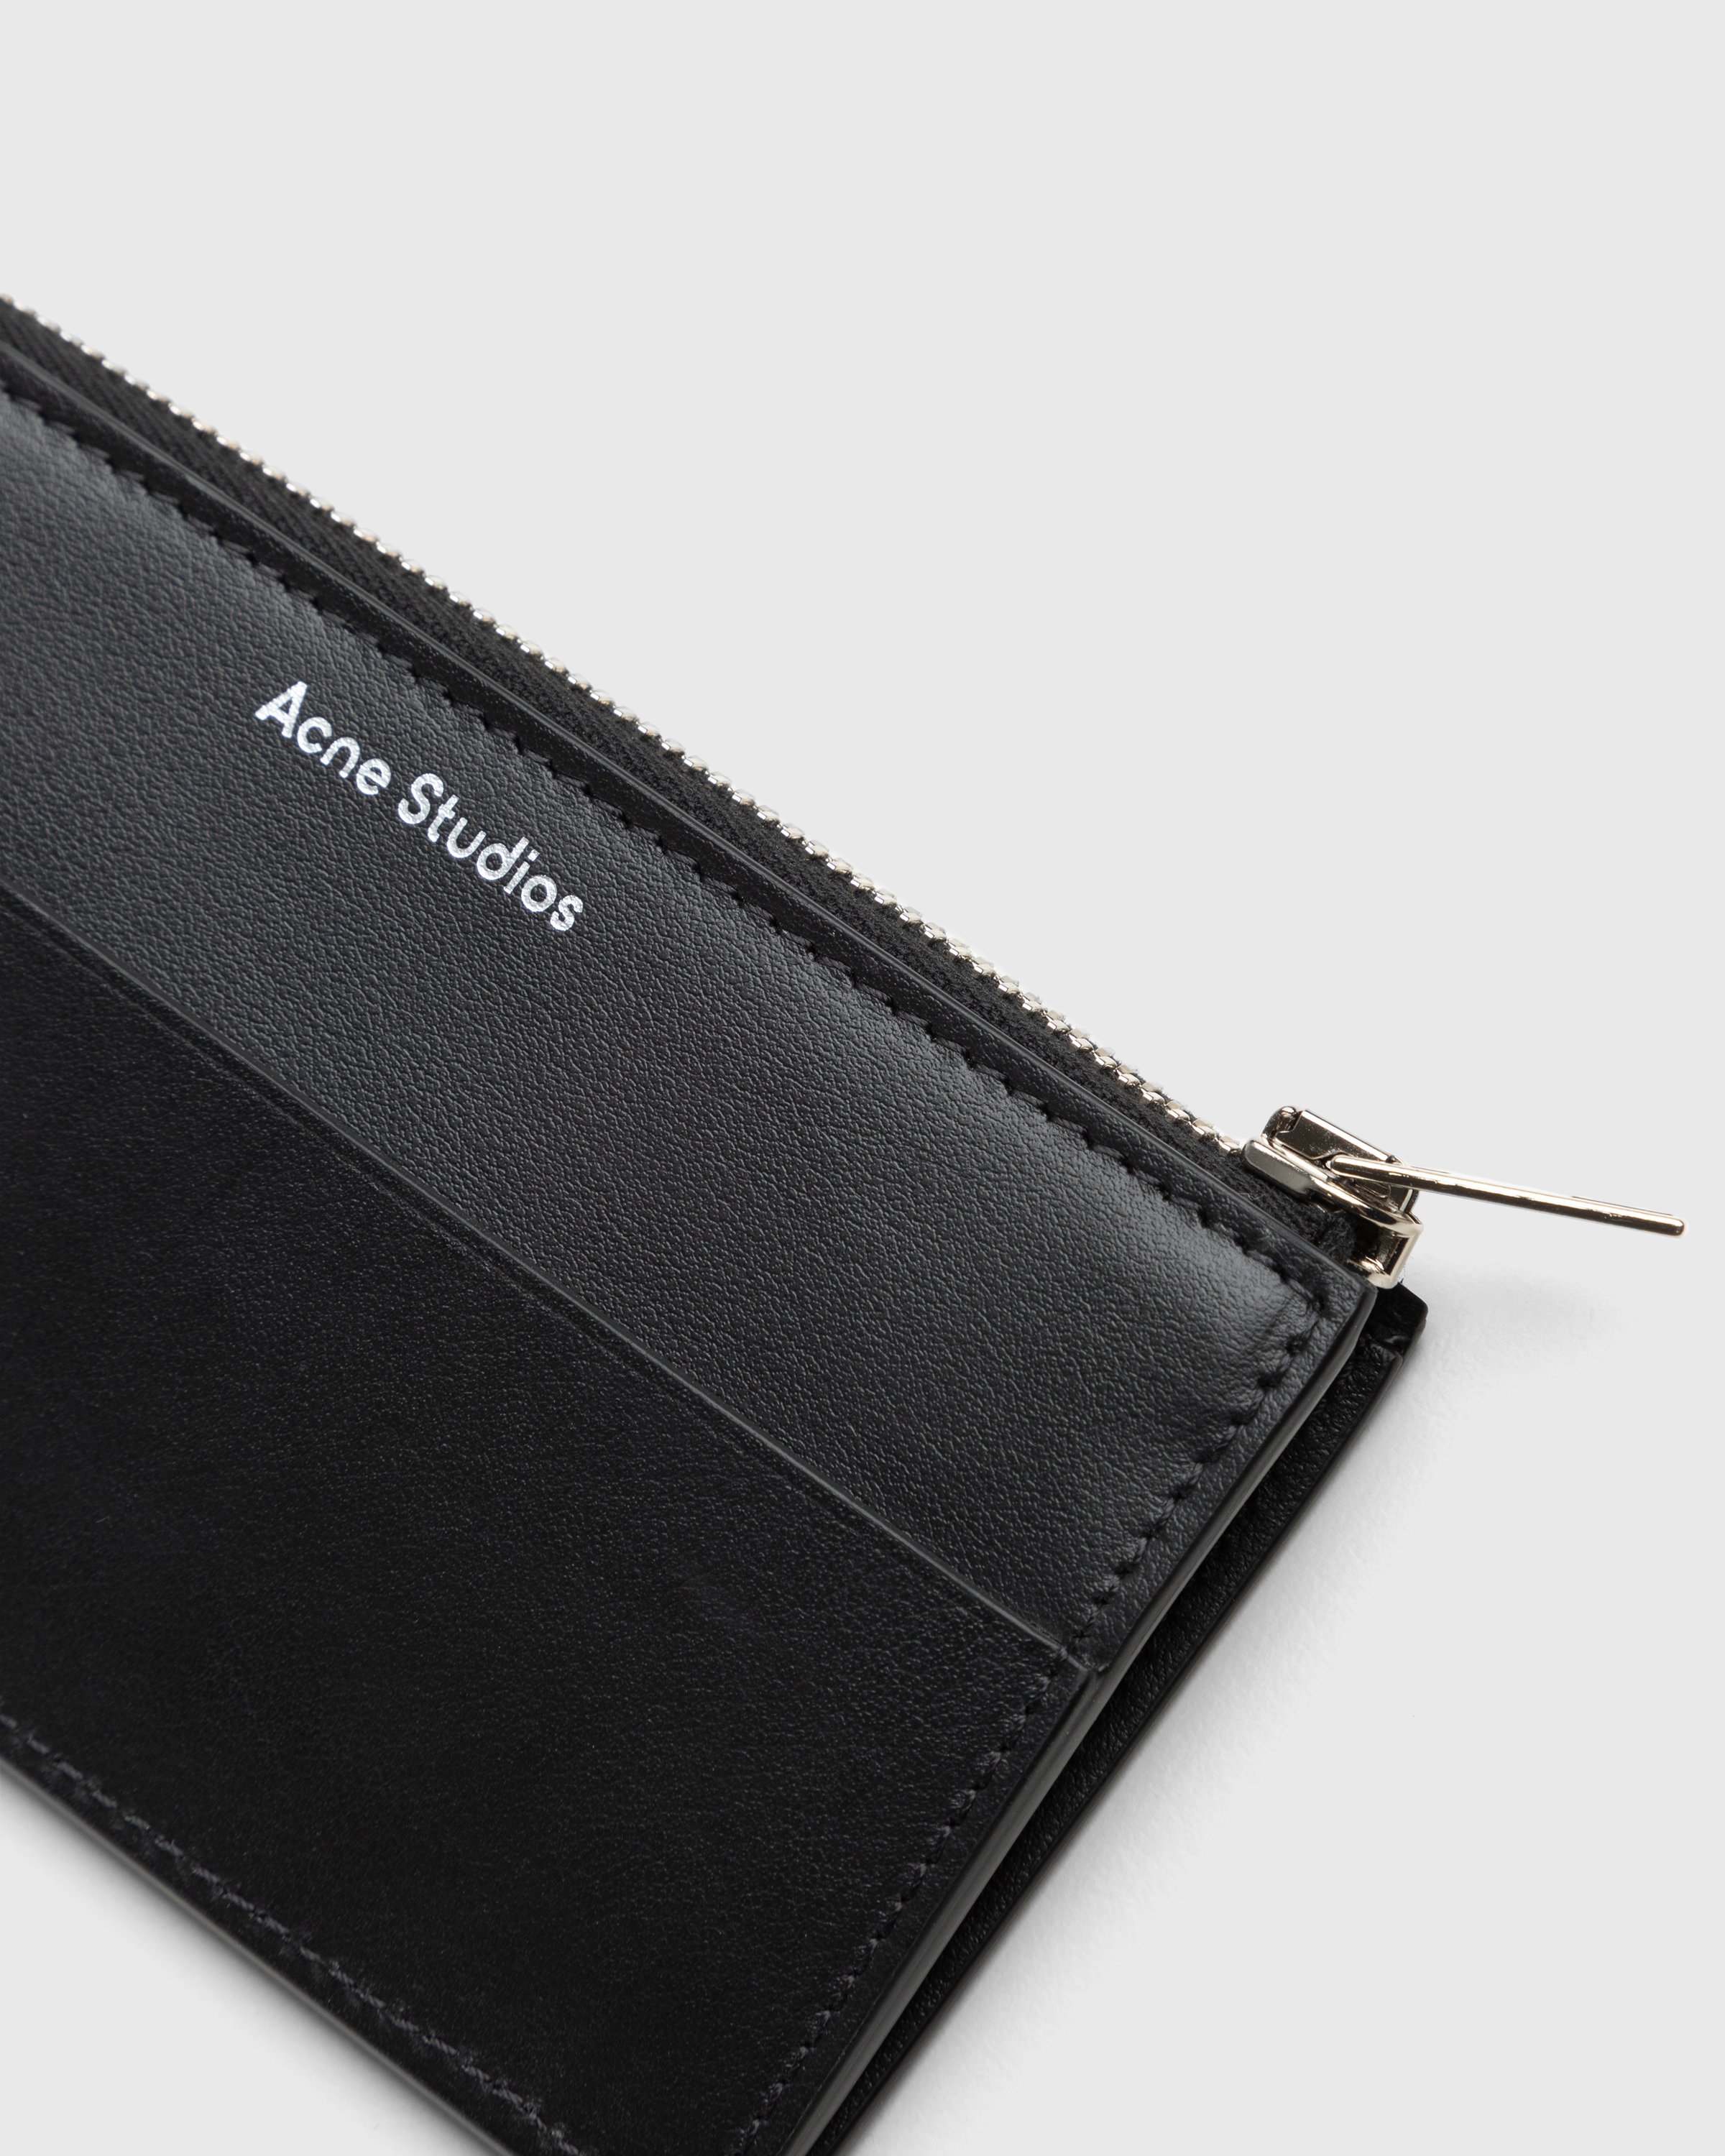 Acne Studios - Leather Zip Wallet Black - Accessories - Black - Image 3